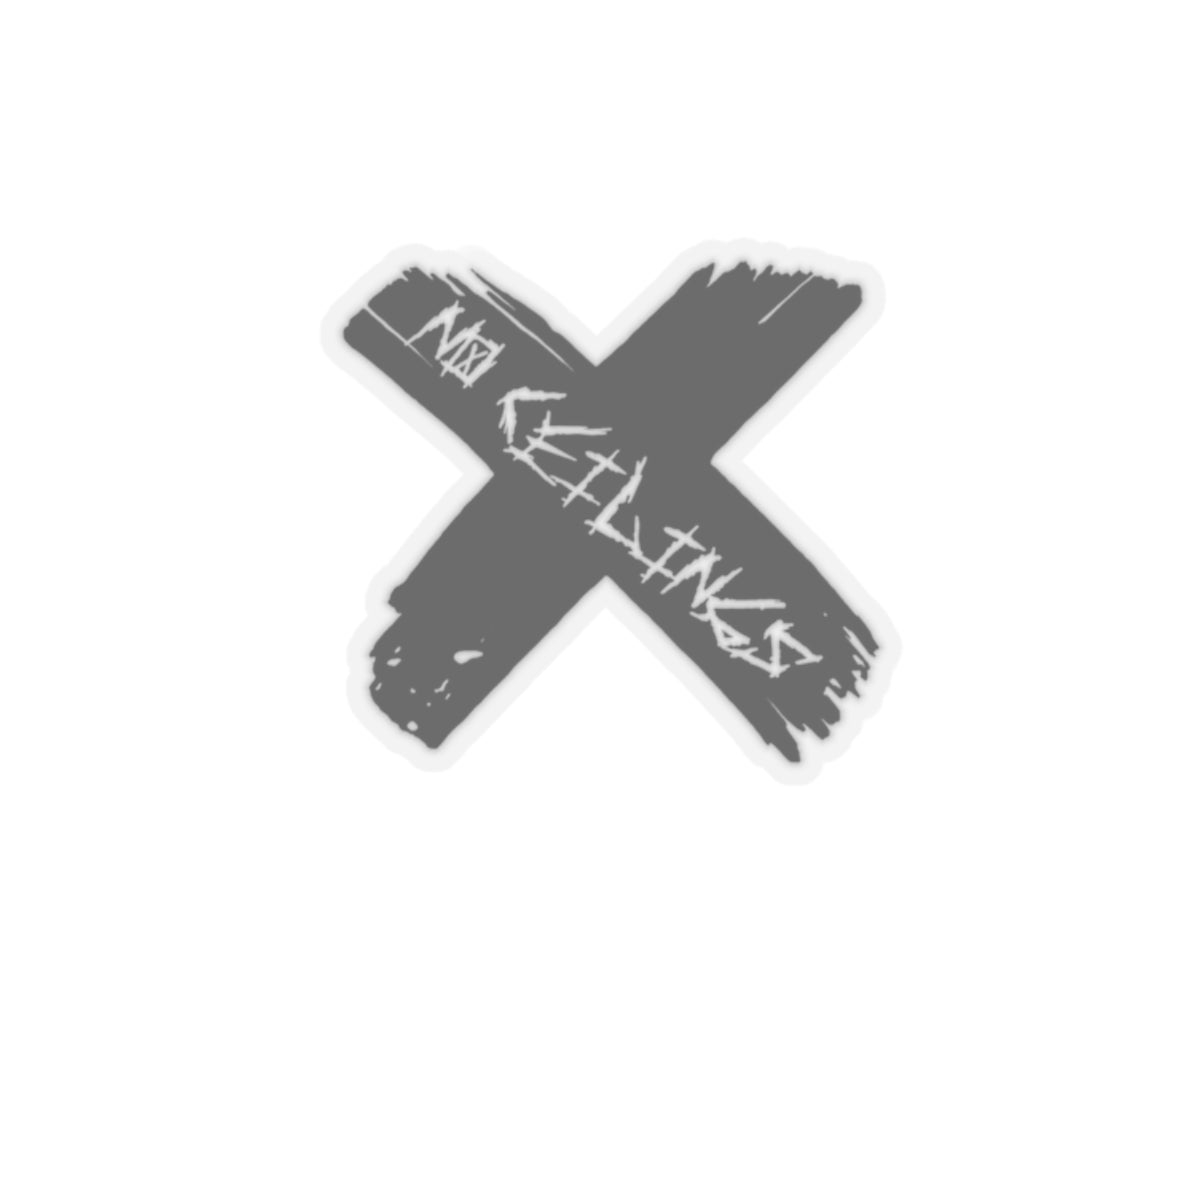 X style Kiss-Cut Stickers